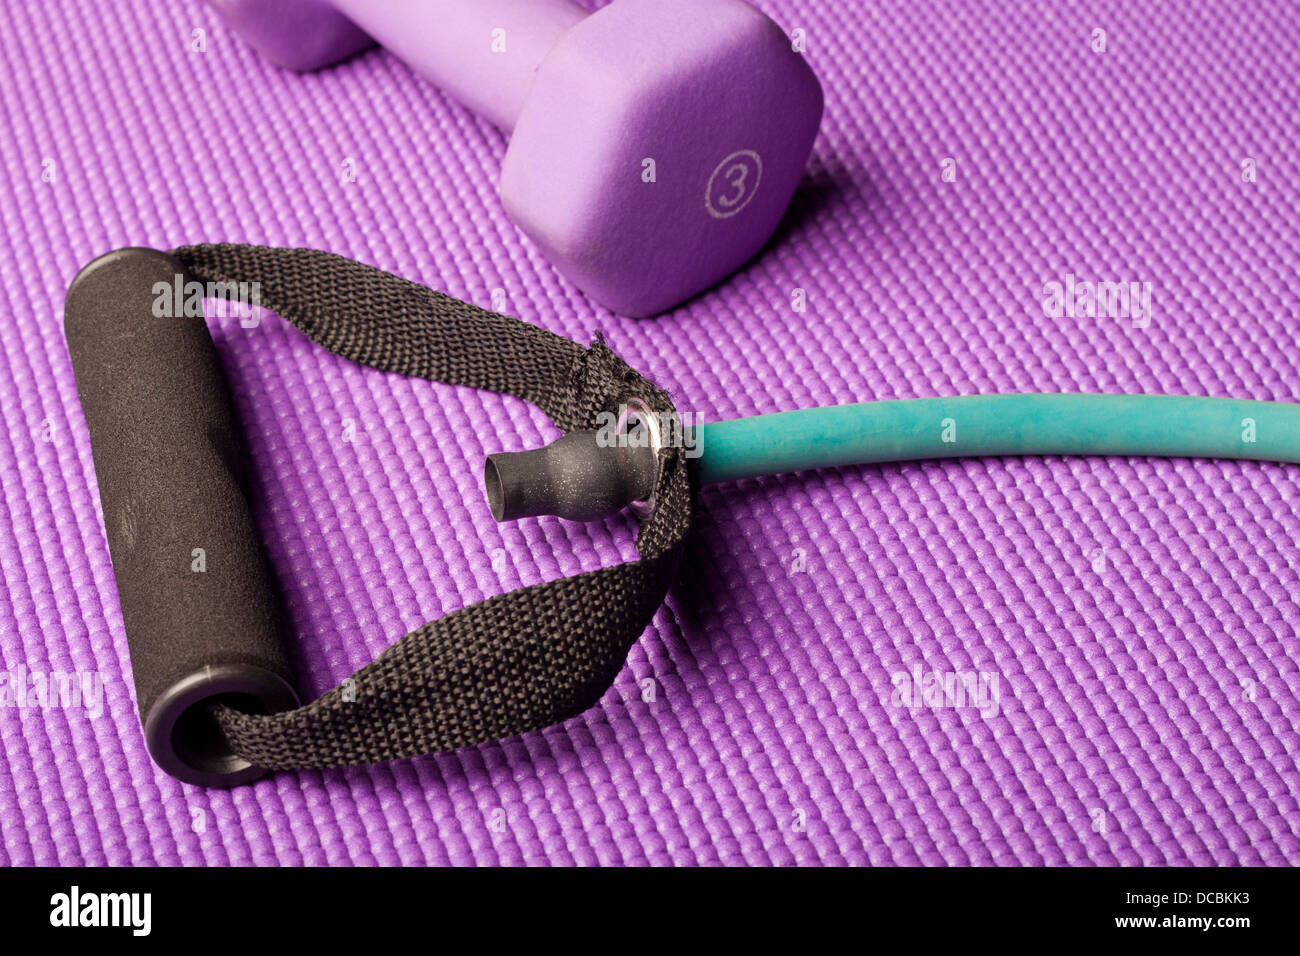 Exercise equipment on a purple yoga mat Stock Photo